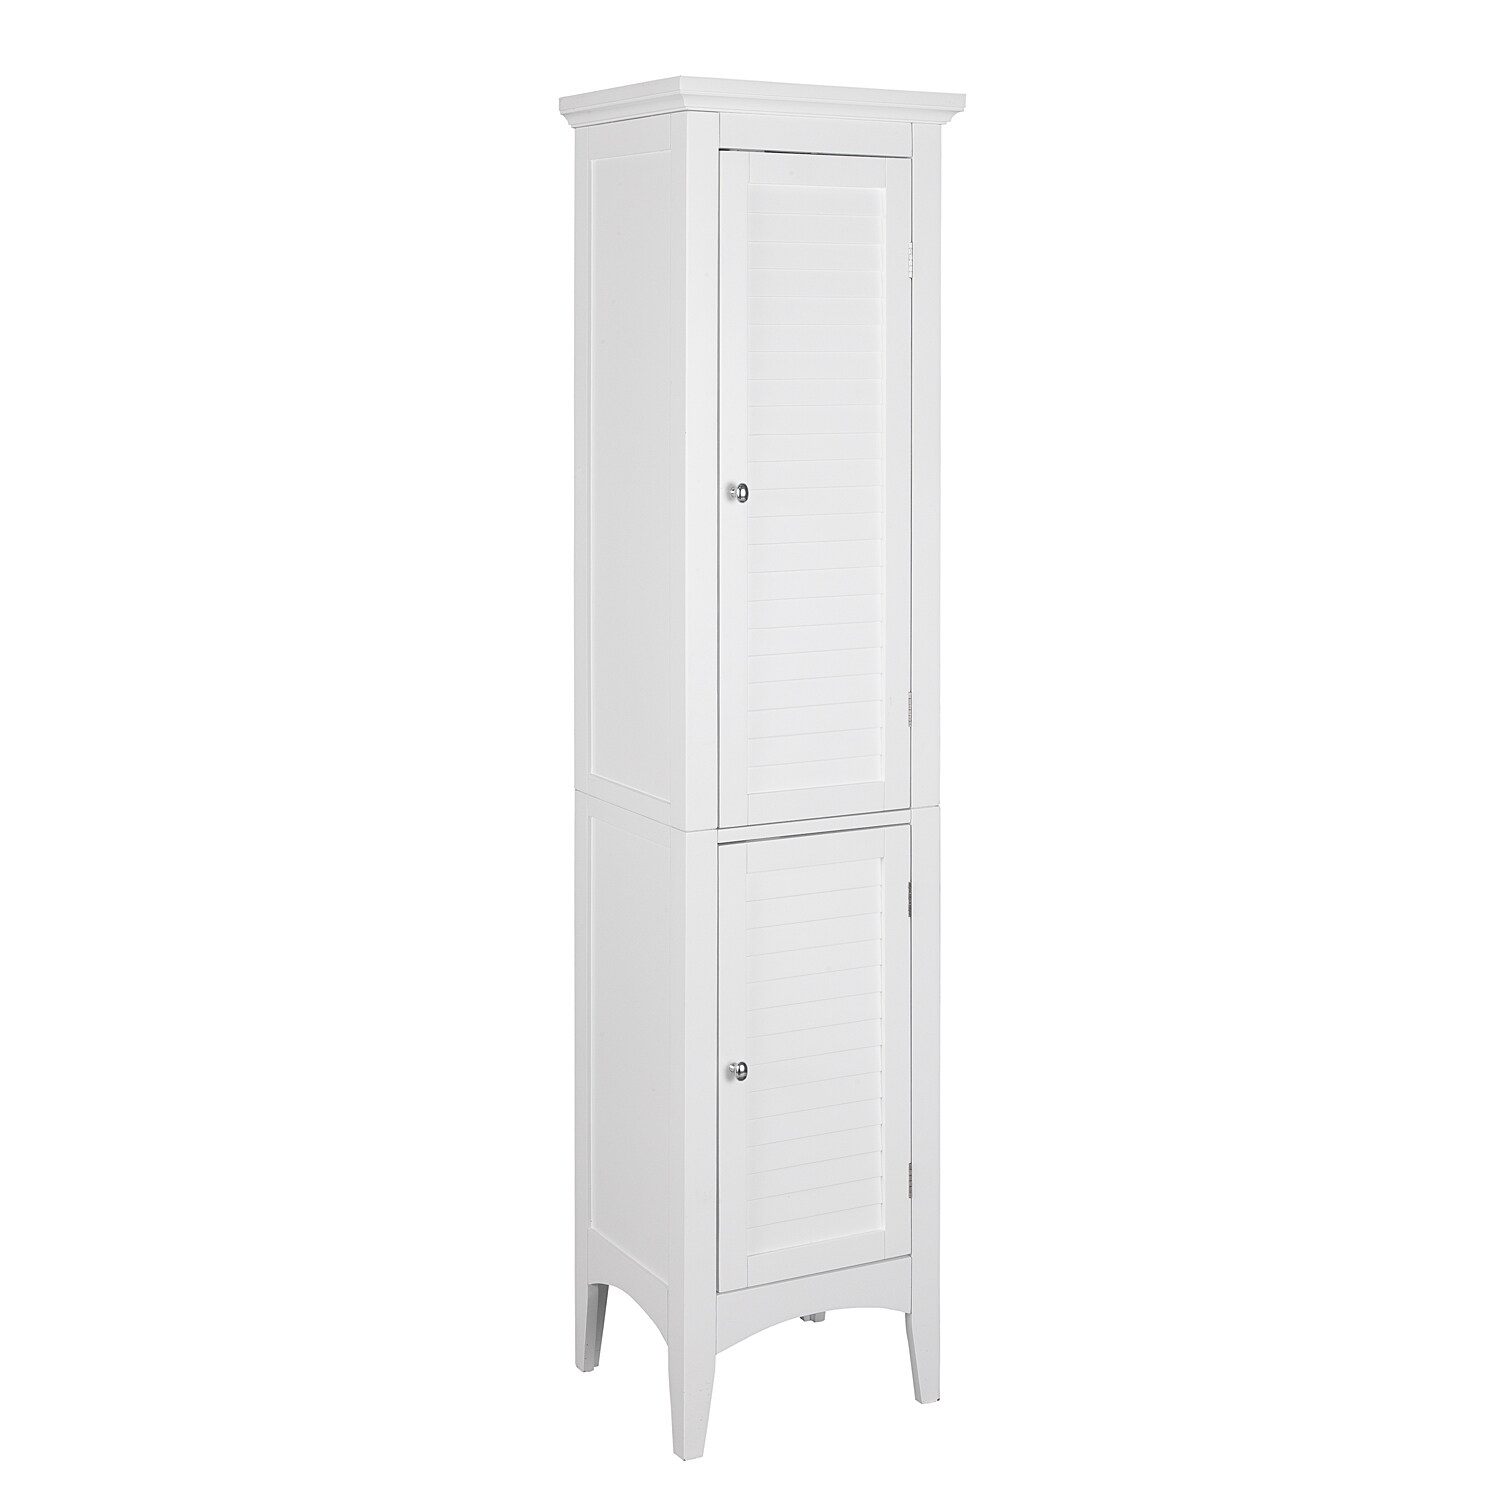 Bathroom Storage Cabinet Free Standing Linen Tower Organizer Pantry Cupboard 